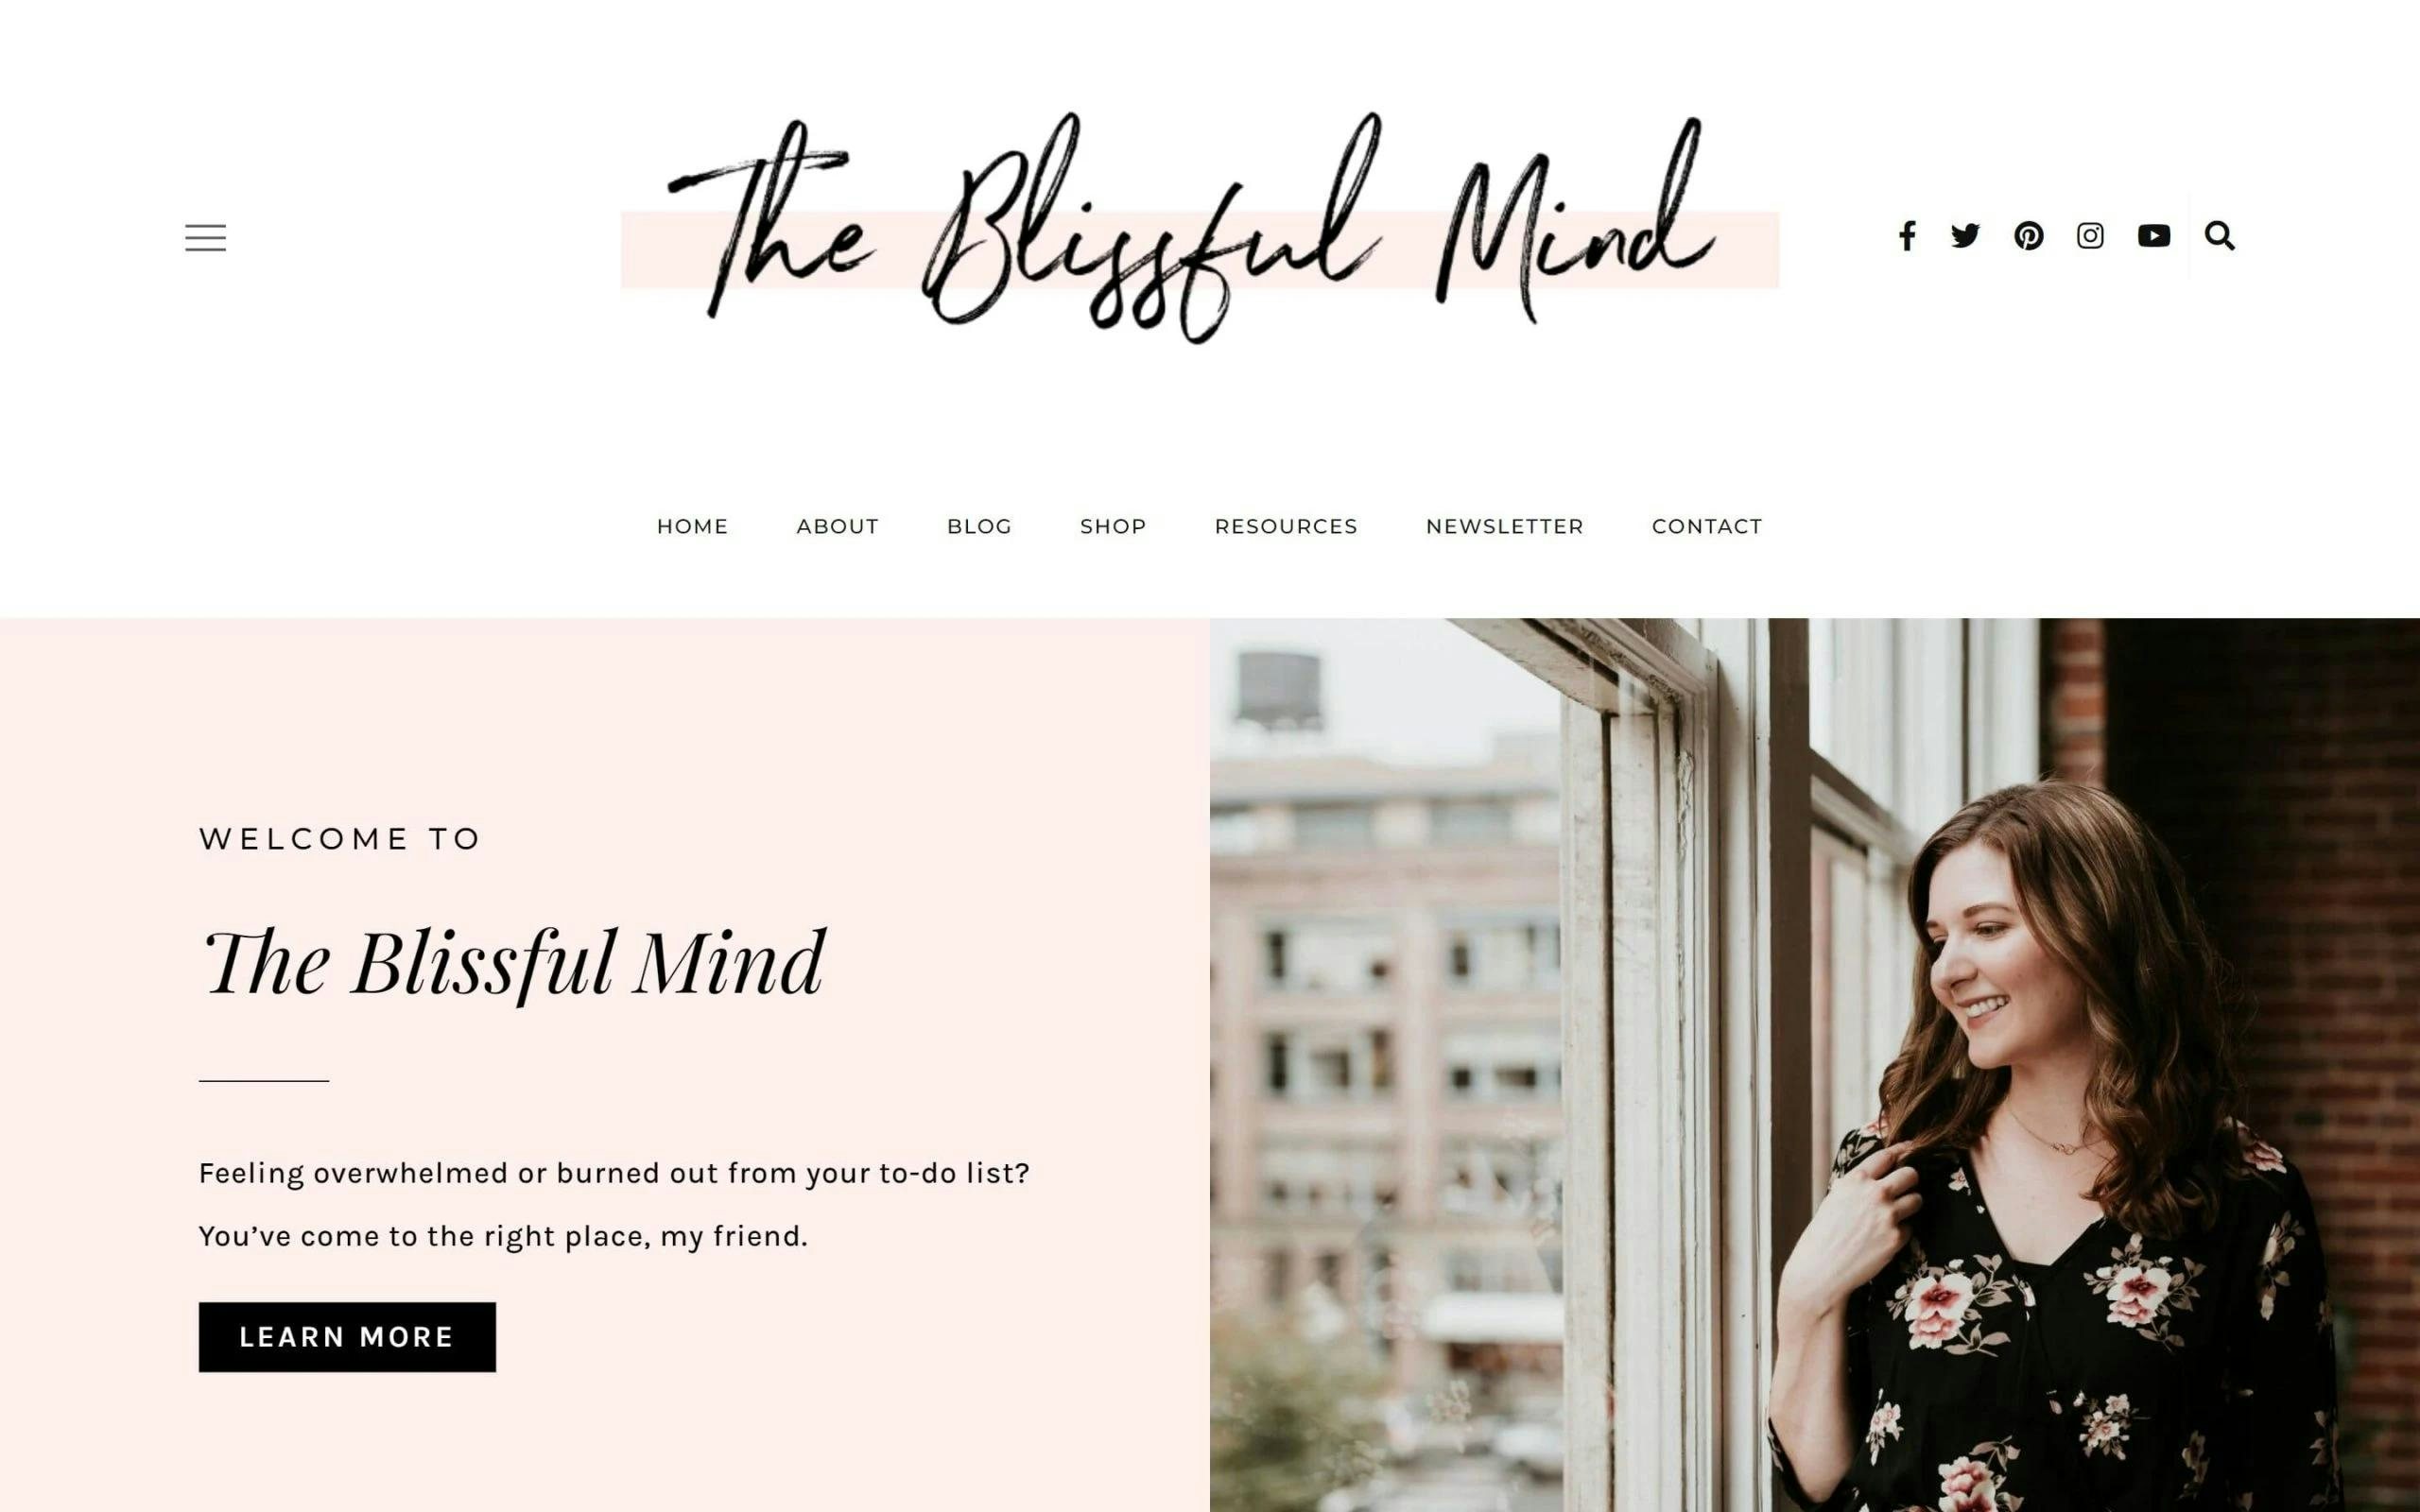 The Blissful Mind blog for women